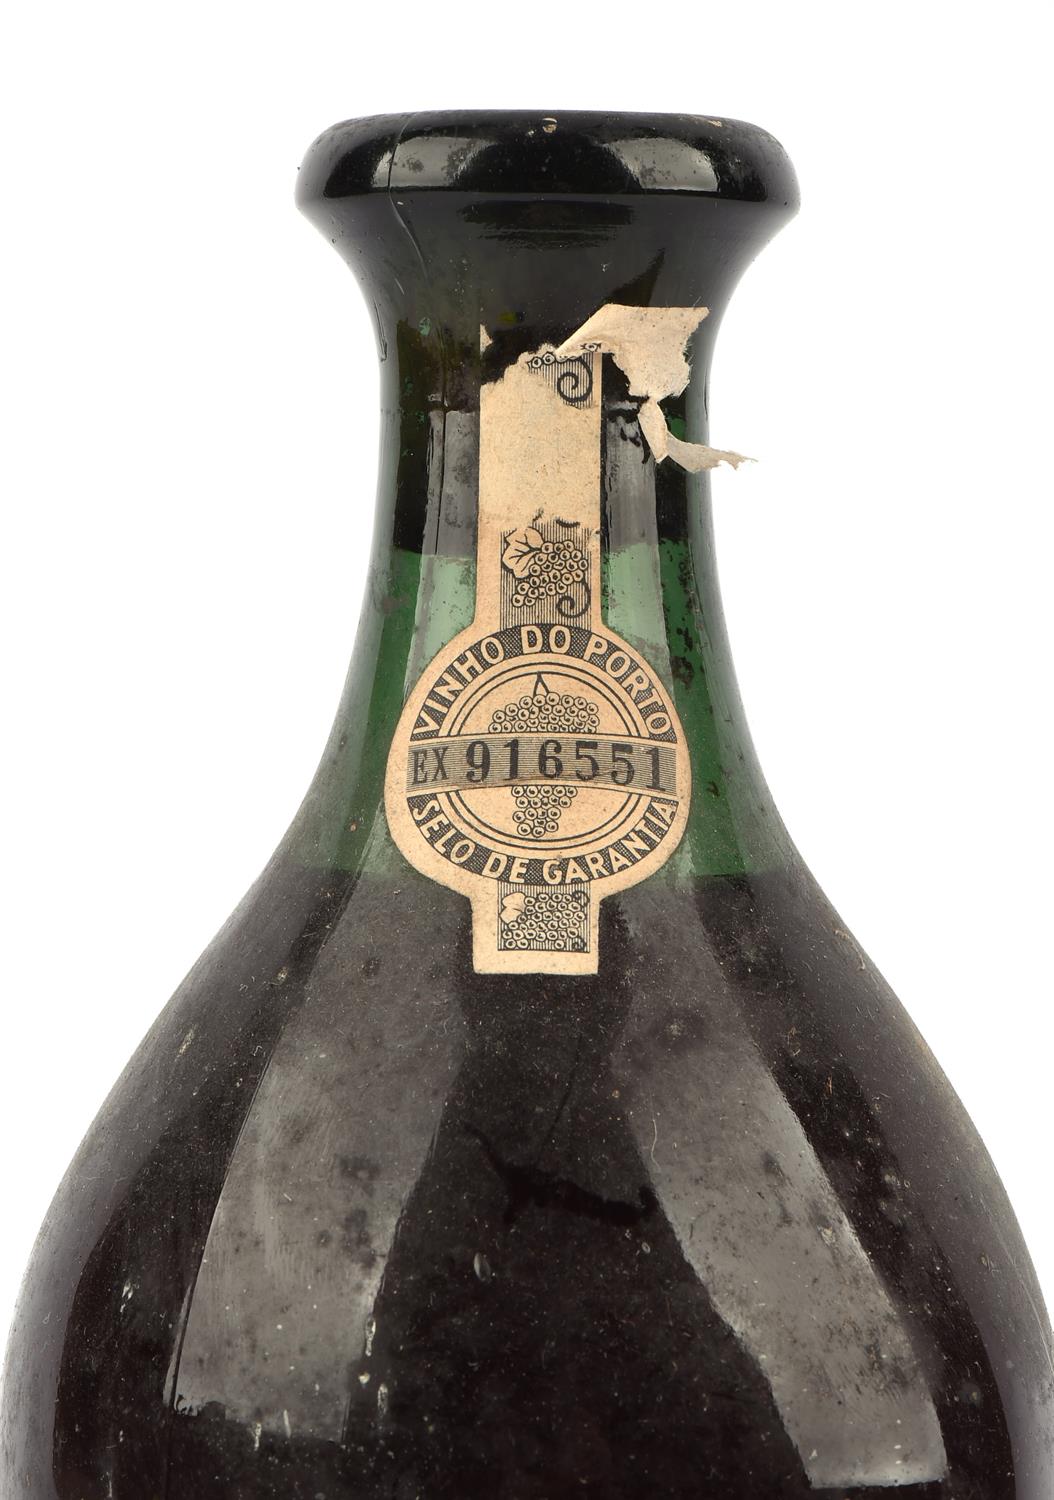 Port, Porto D' Alva 1934, one bottle - Image 3 of 4